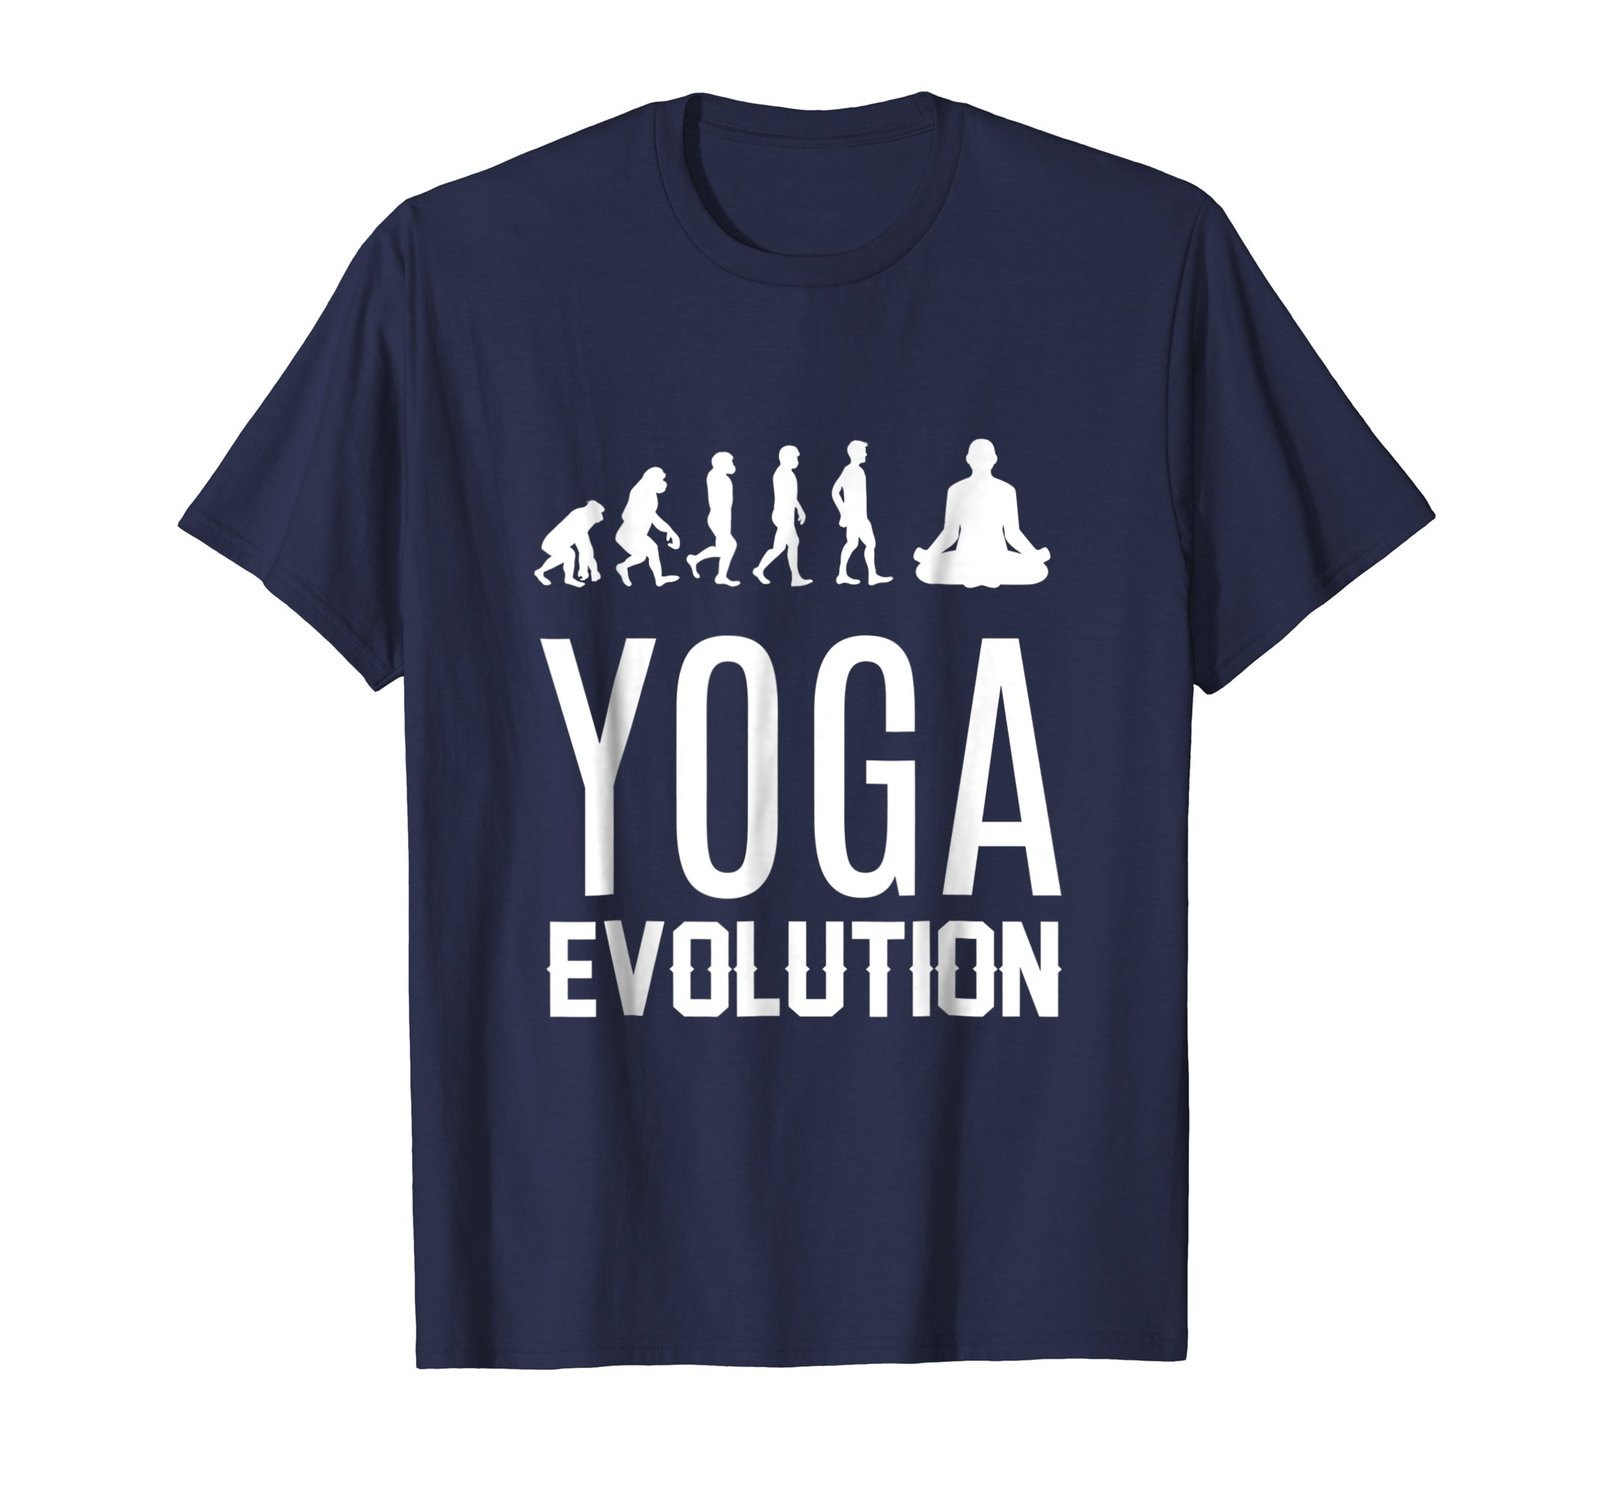 Funny Shirts - Yoga Evolution T-shirt Gifts Men